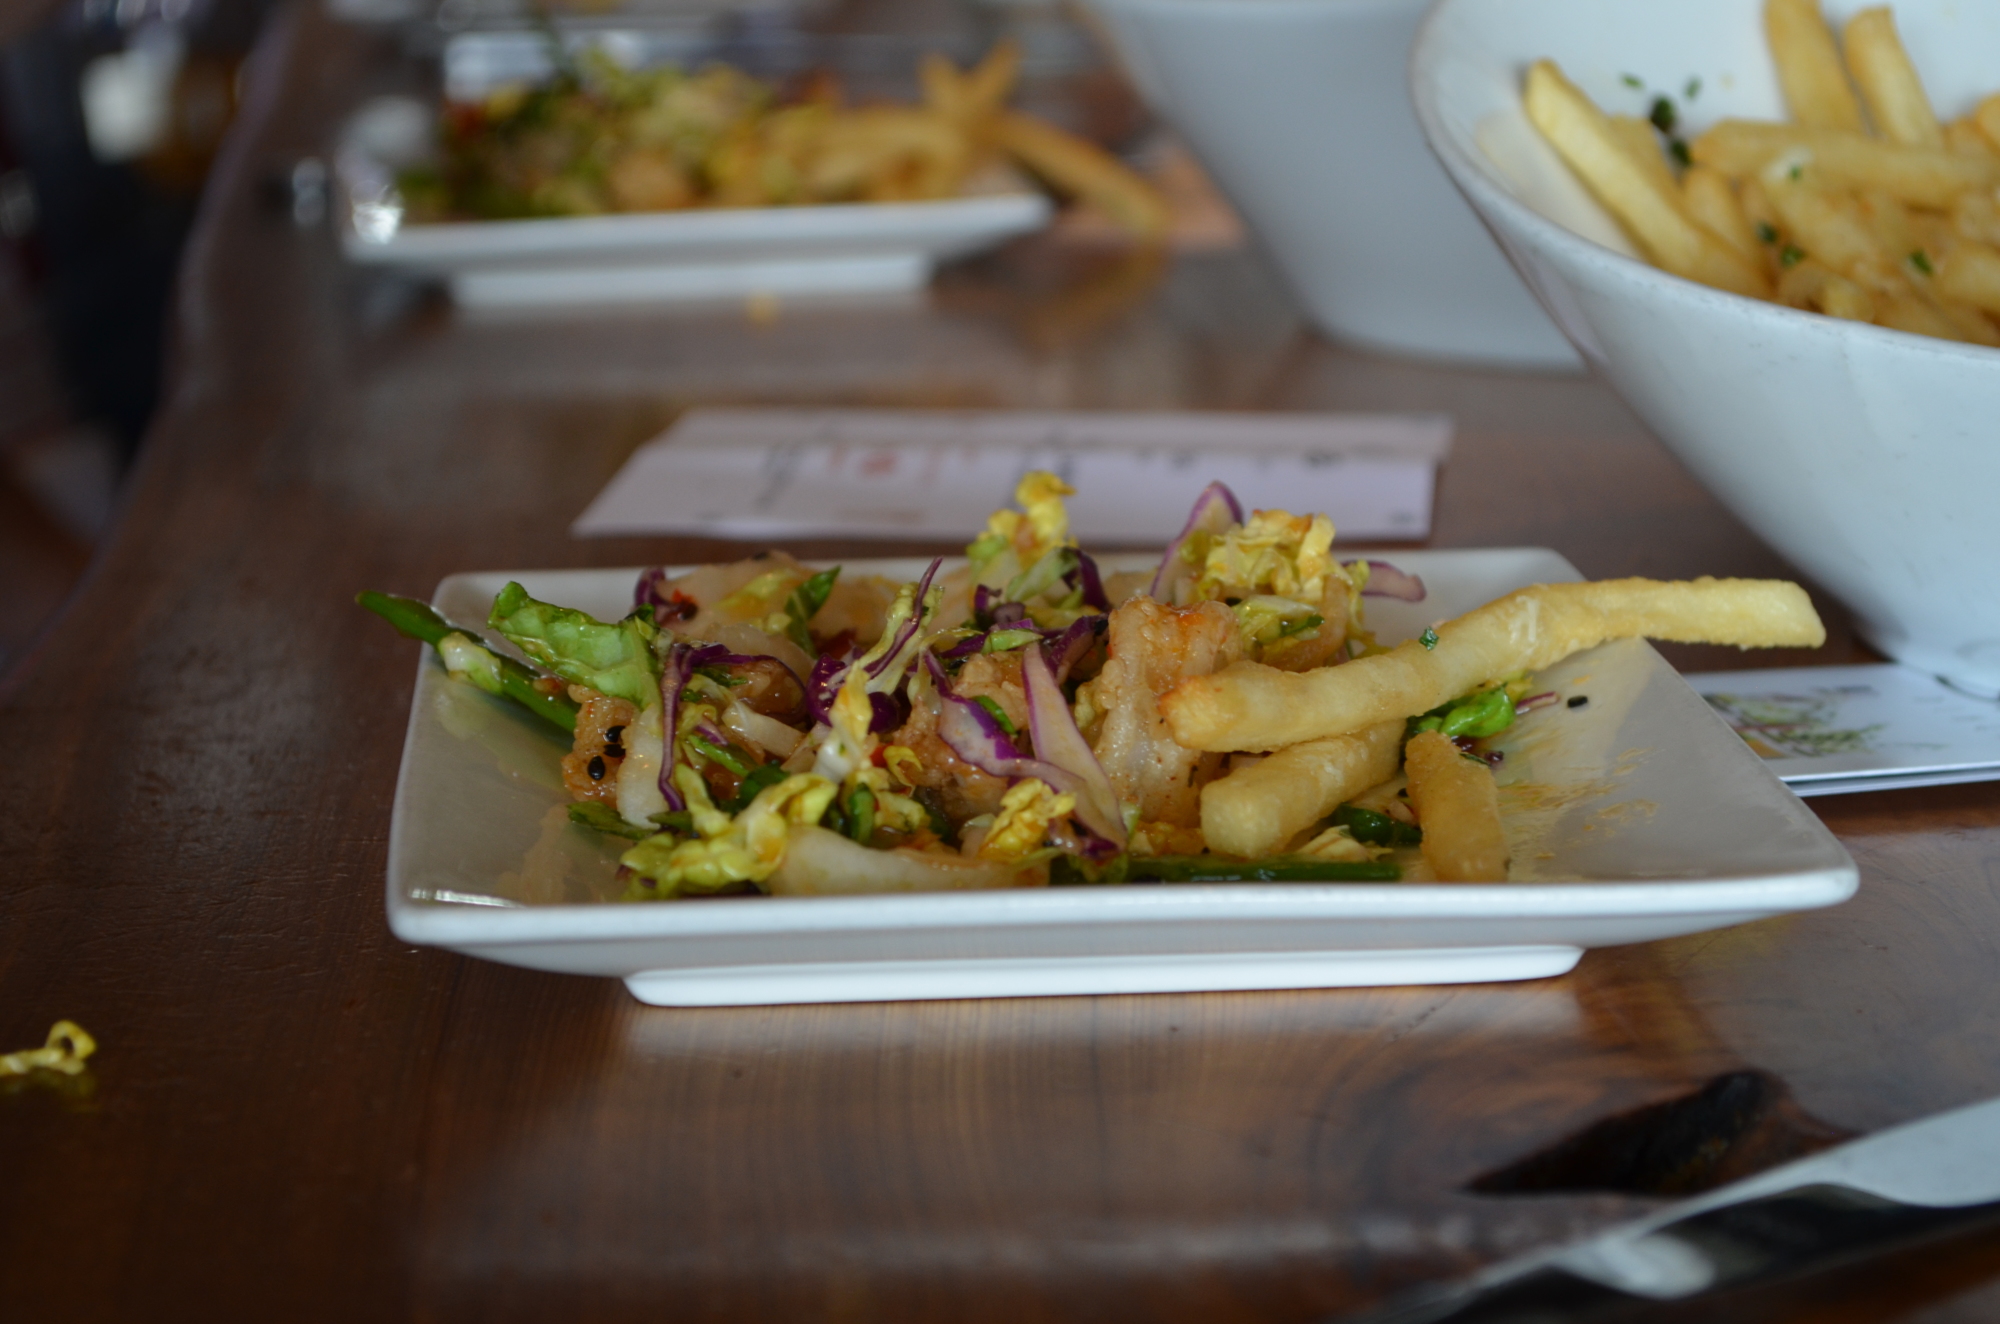 Shore Diner serves truffle fries and calamari to tour participants.